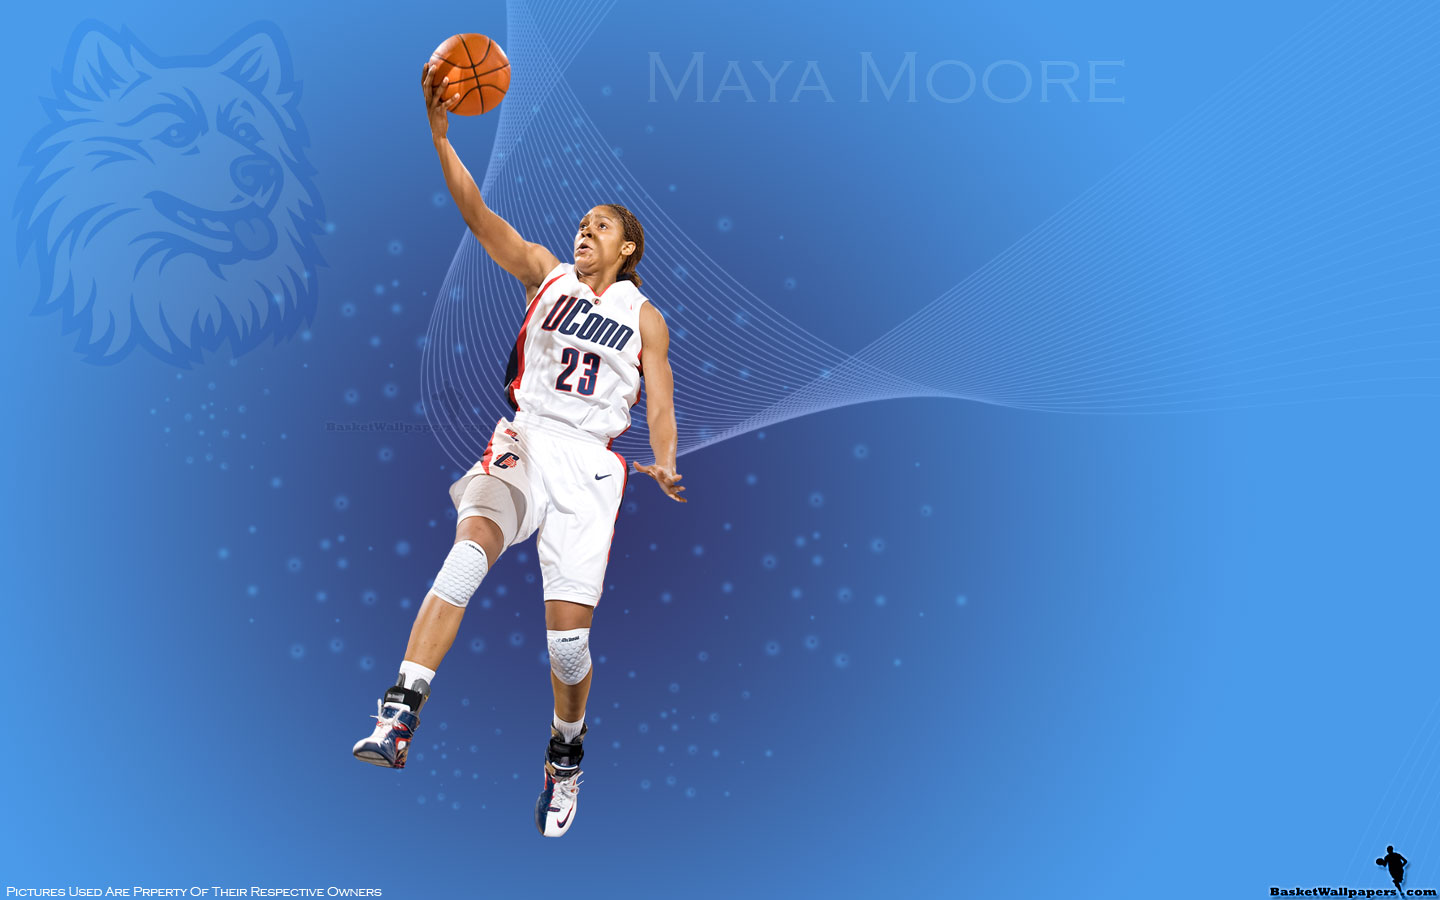 Maya Moore UCONN Huskies Widescreen Wallpaper | Basketball Wallpapers ...
